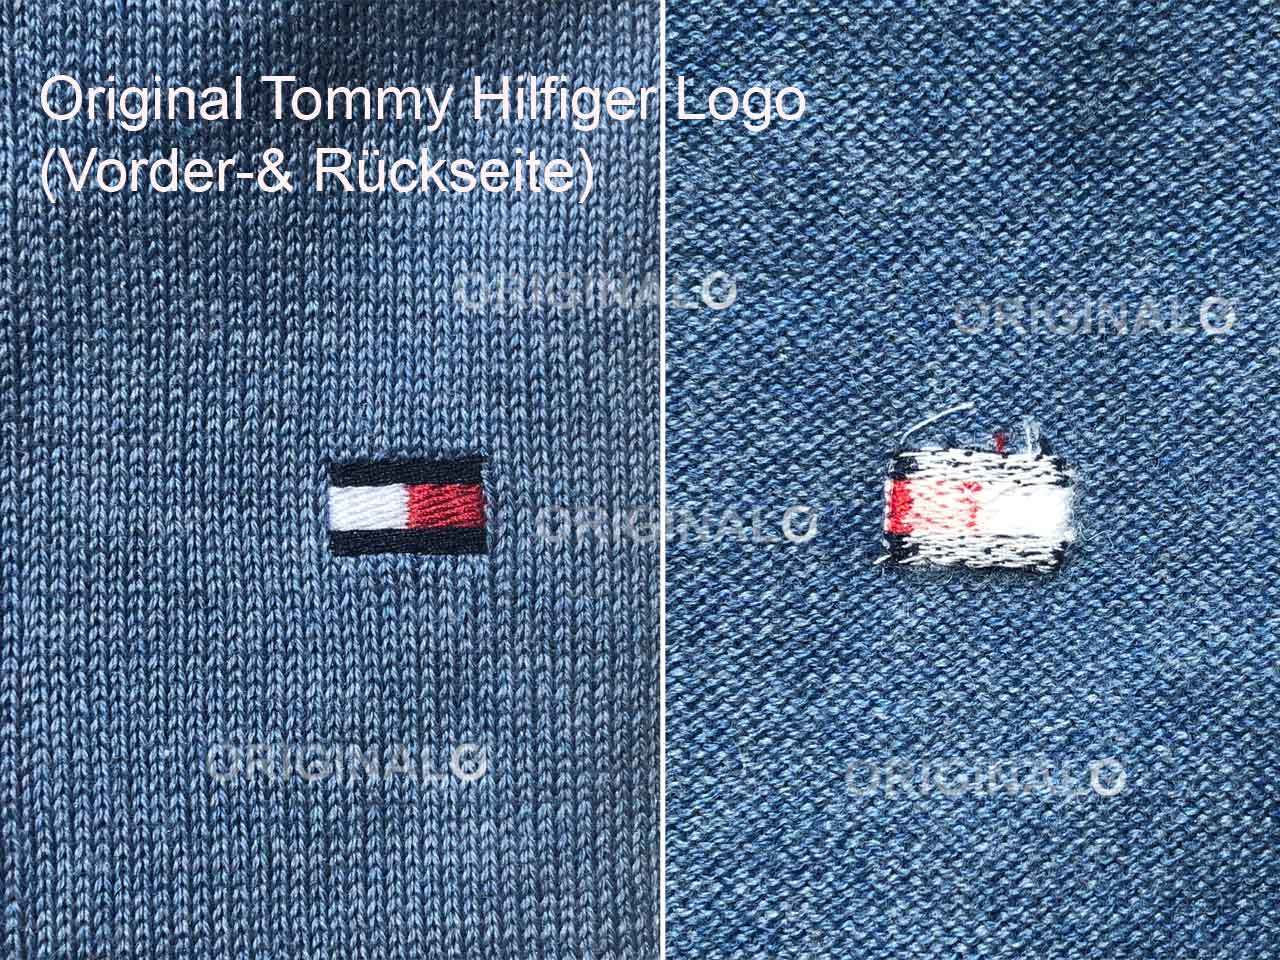 Original Tommy Hilfiger sweater logo from Fake distinguish